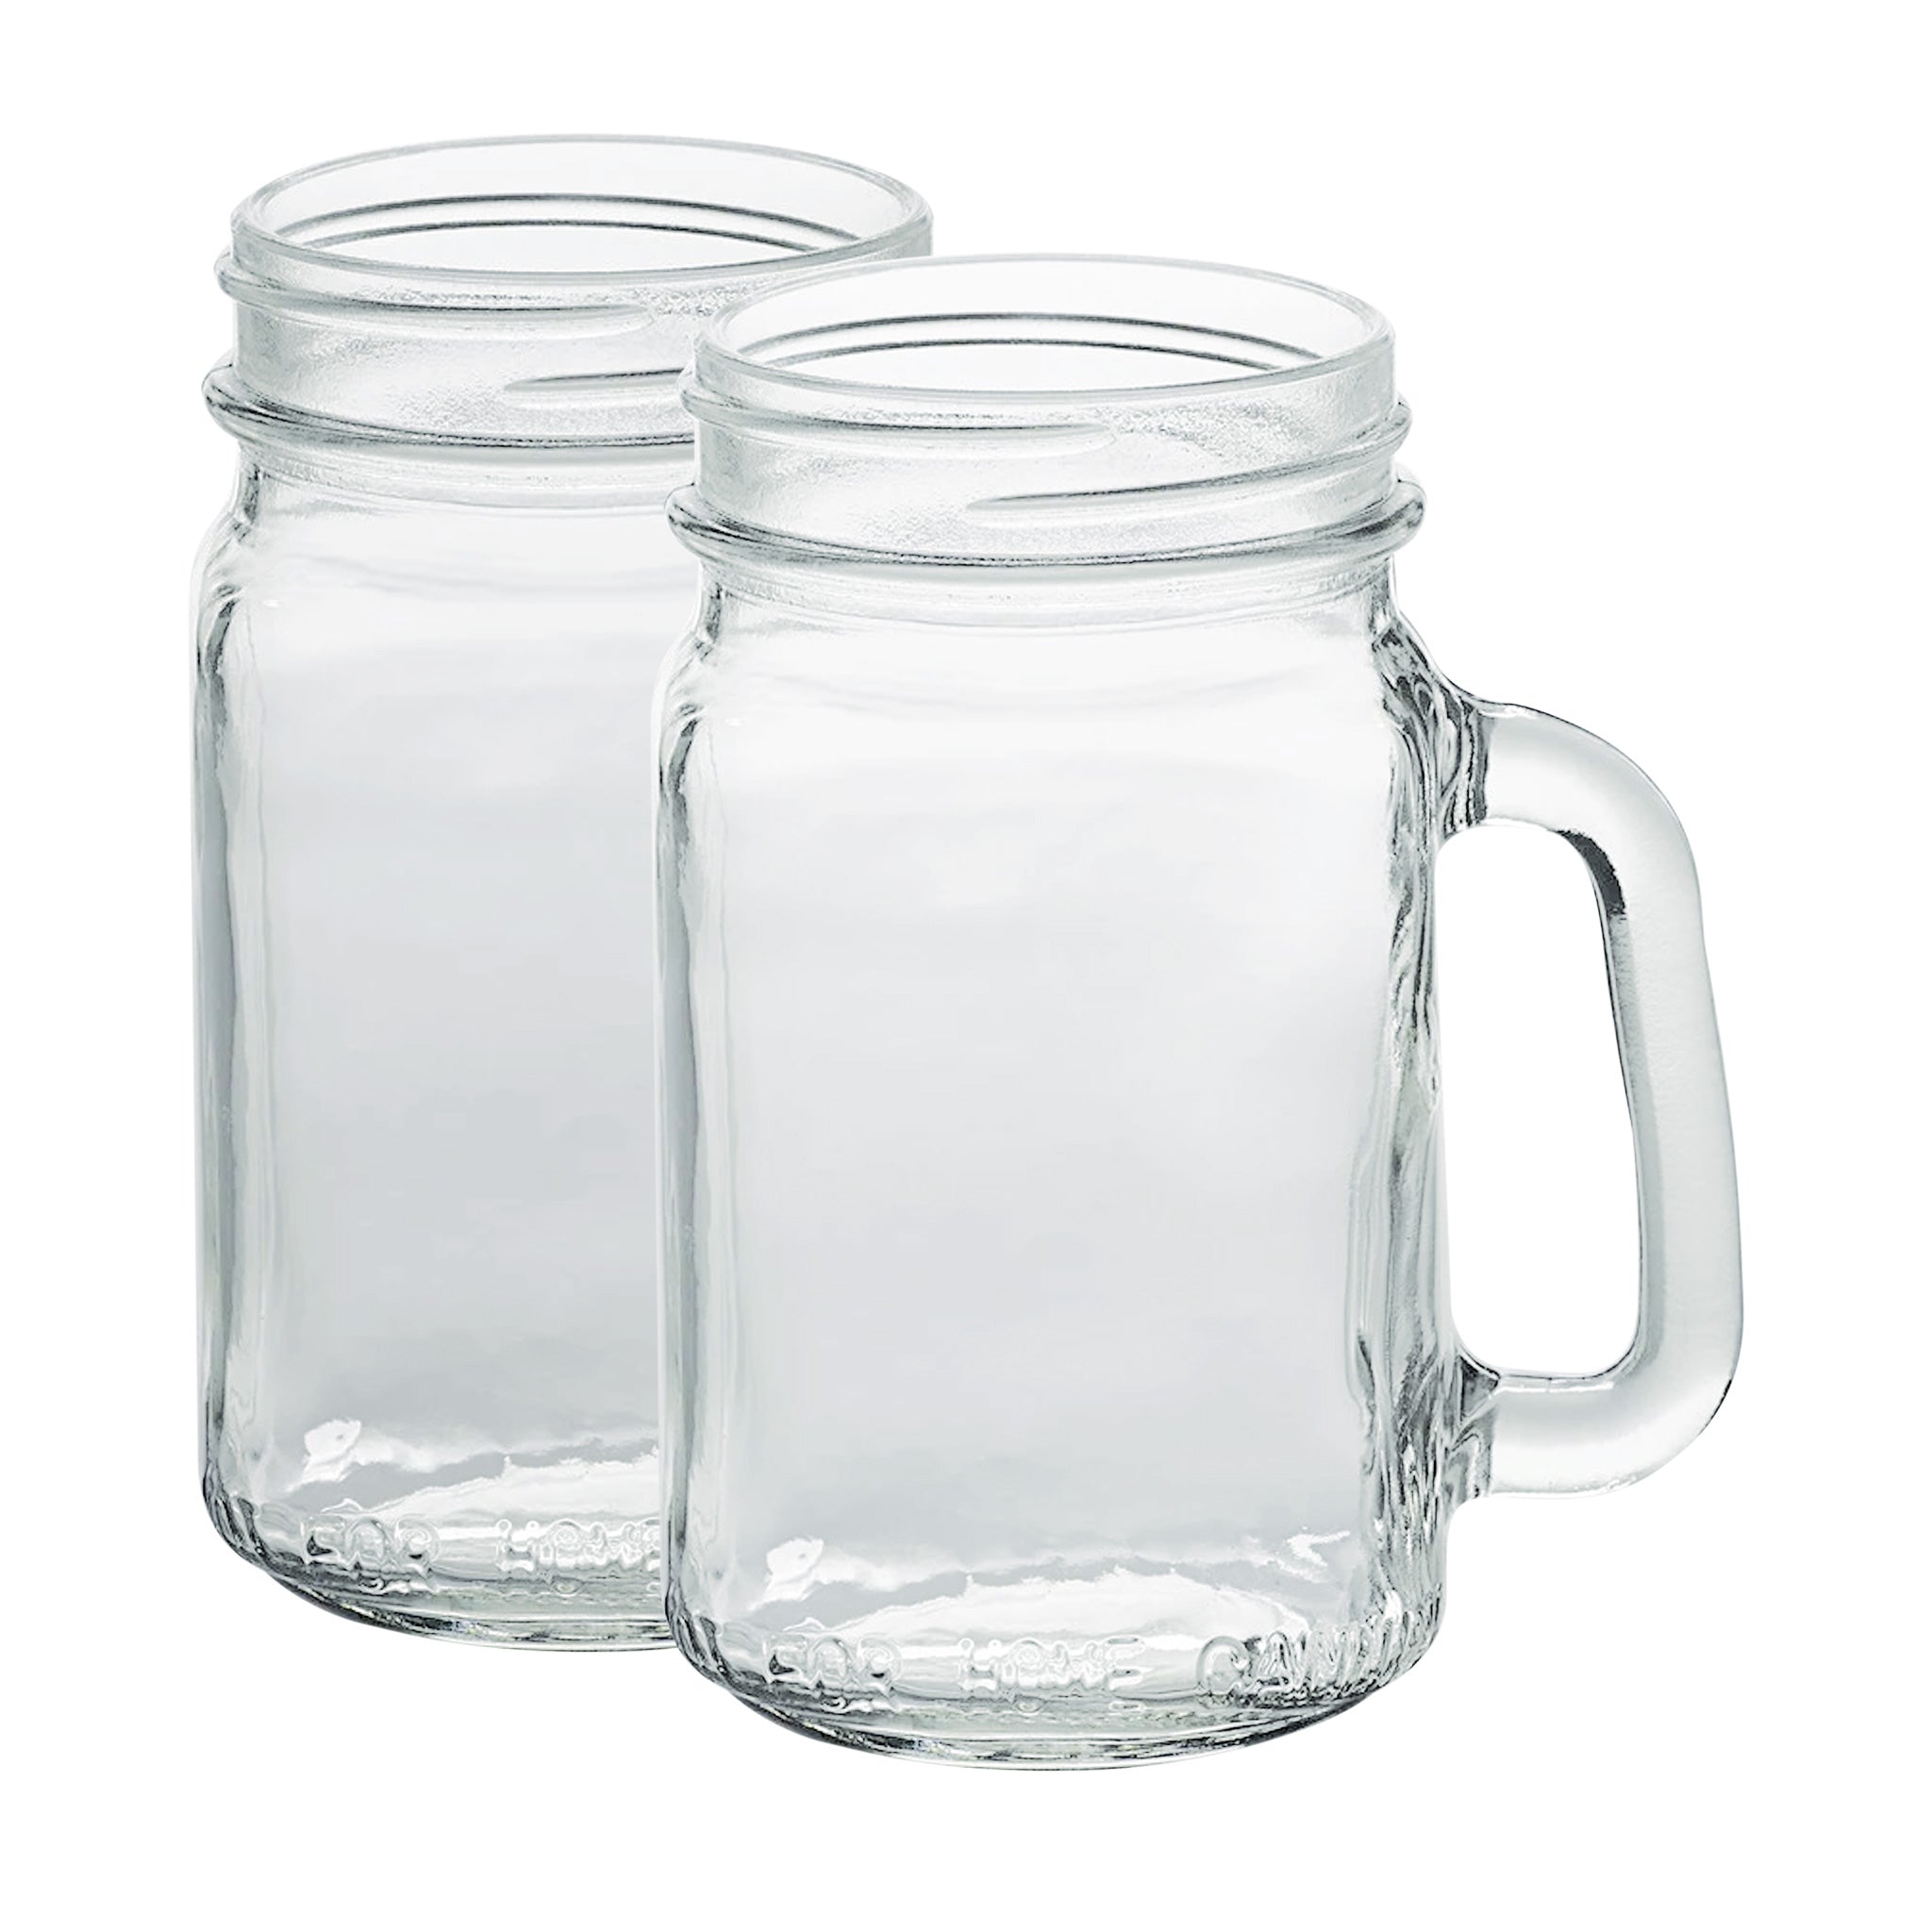 16 oz. Mason Drinking Glass Jars Without Handles